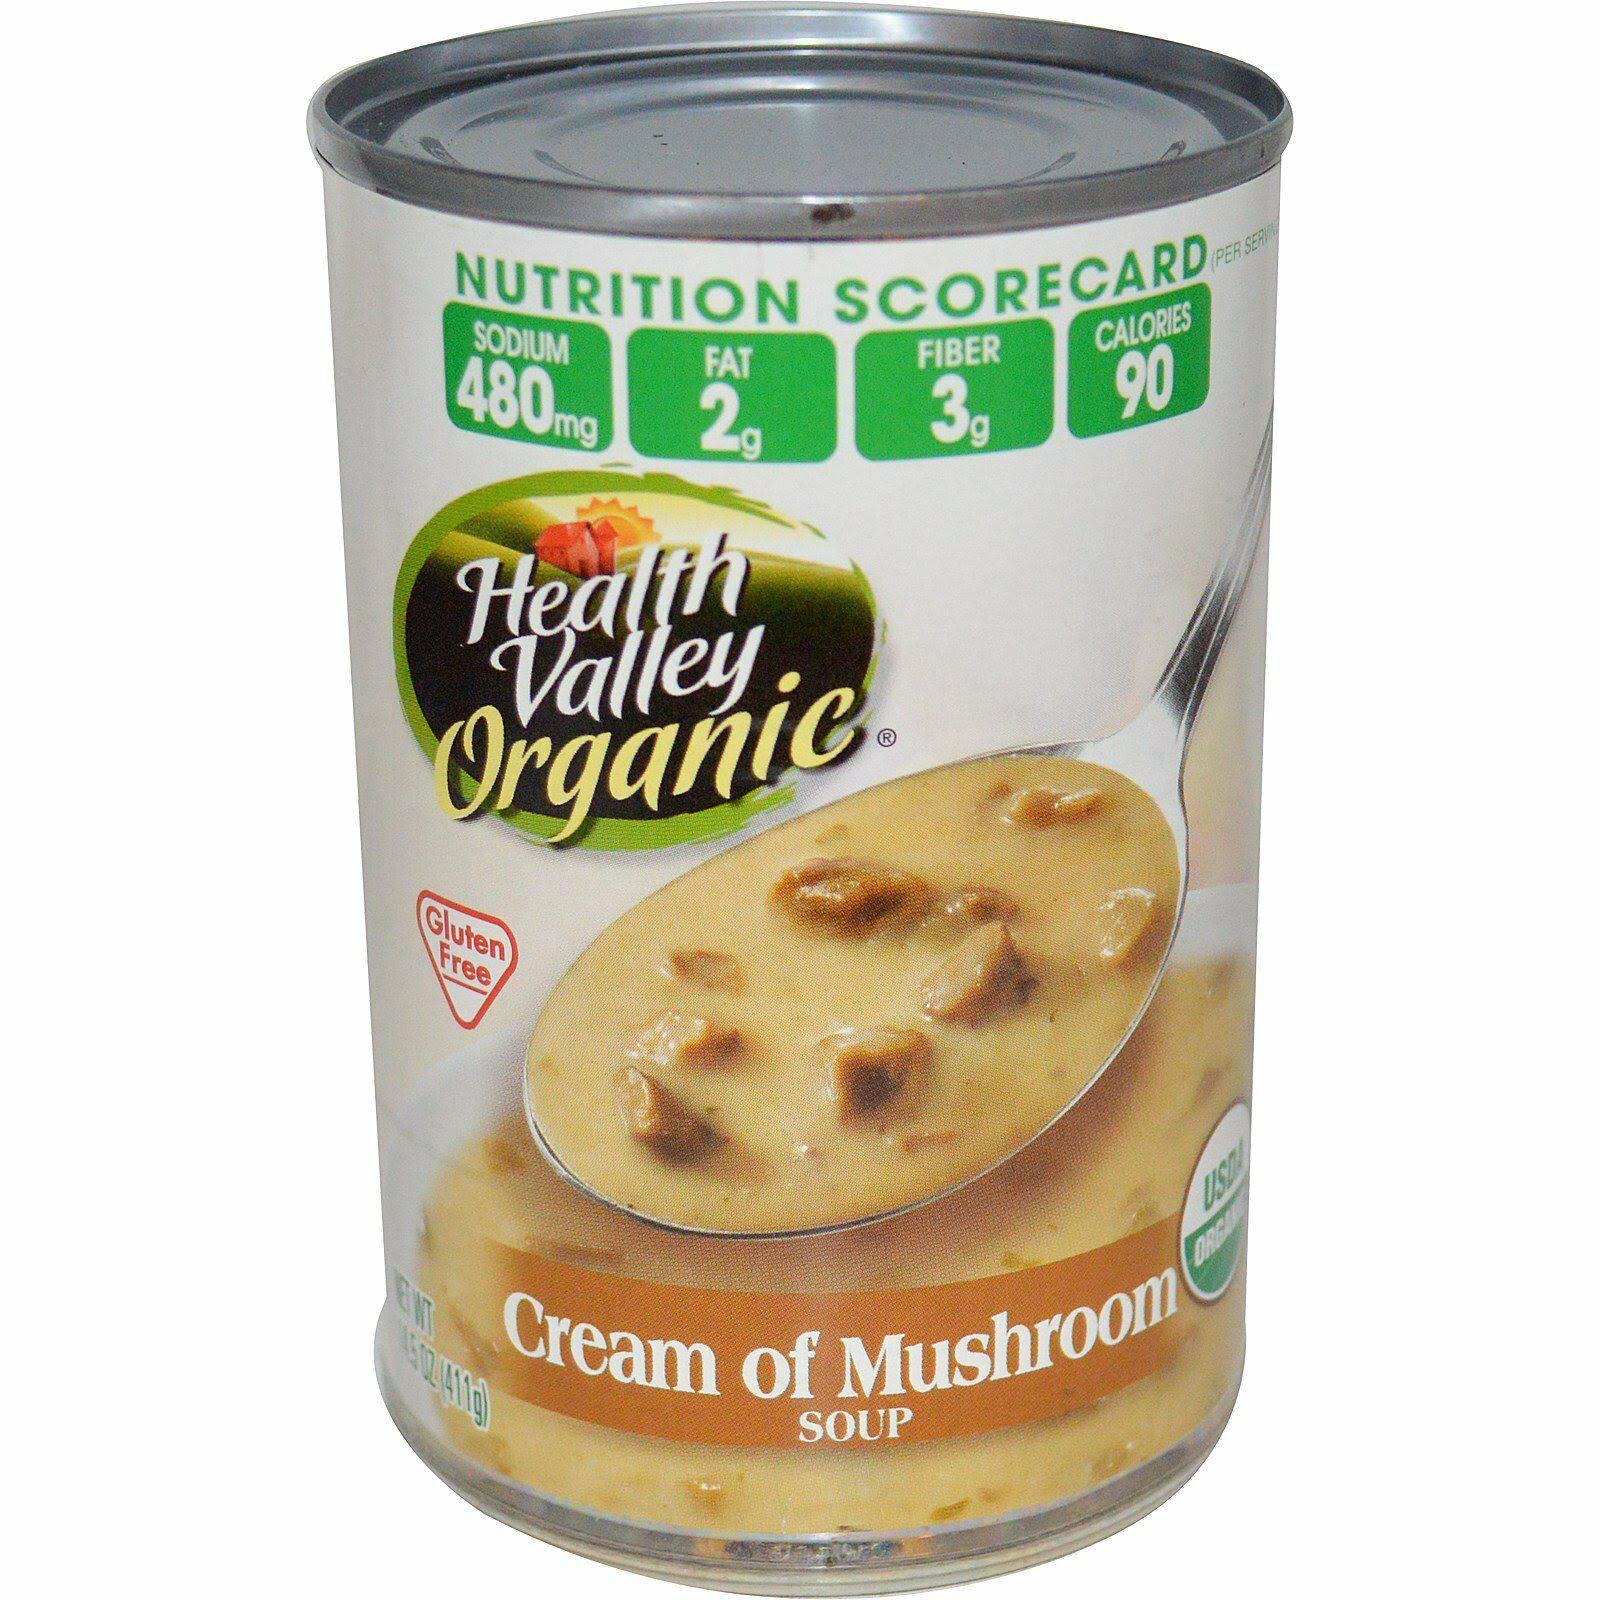 Health Valley Organic: Cream of Mushroom Soup, 14.5 oz